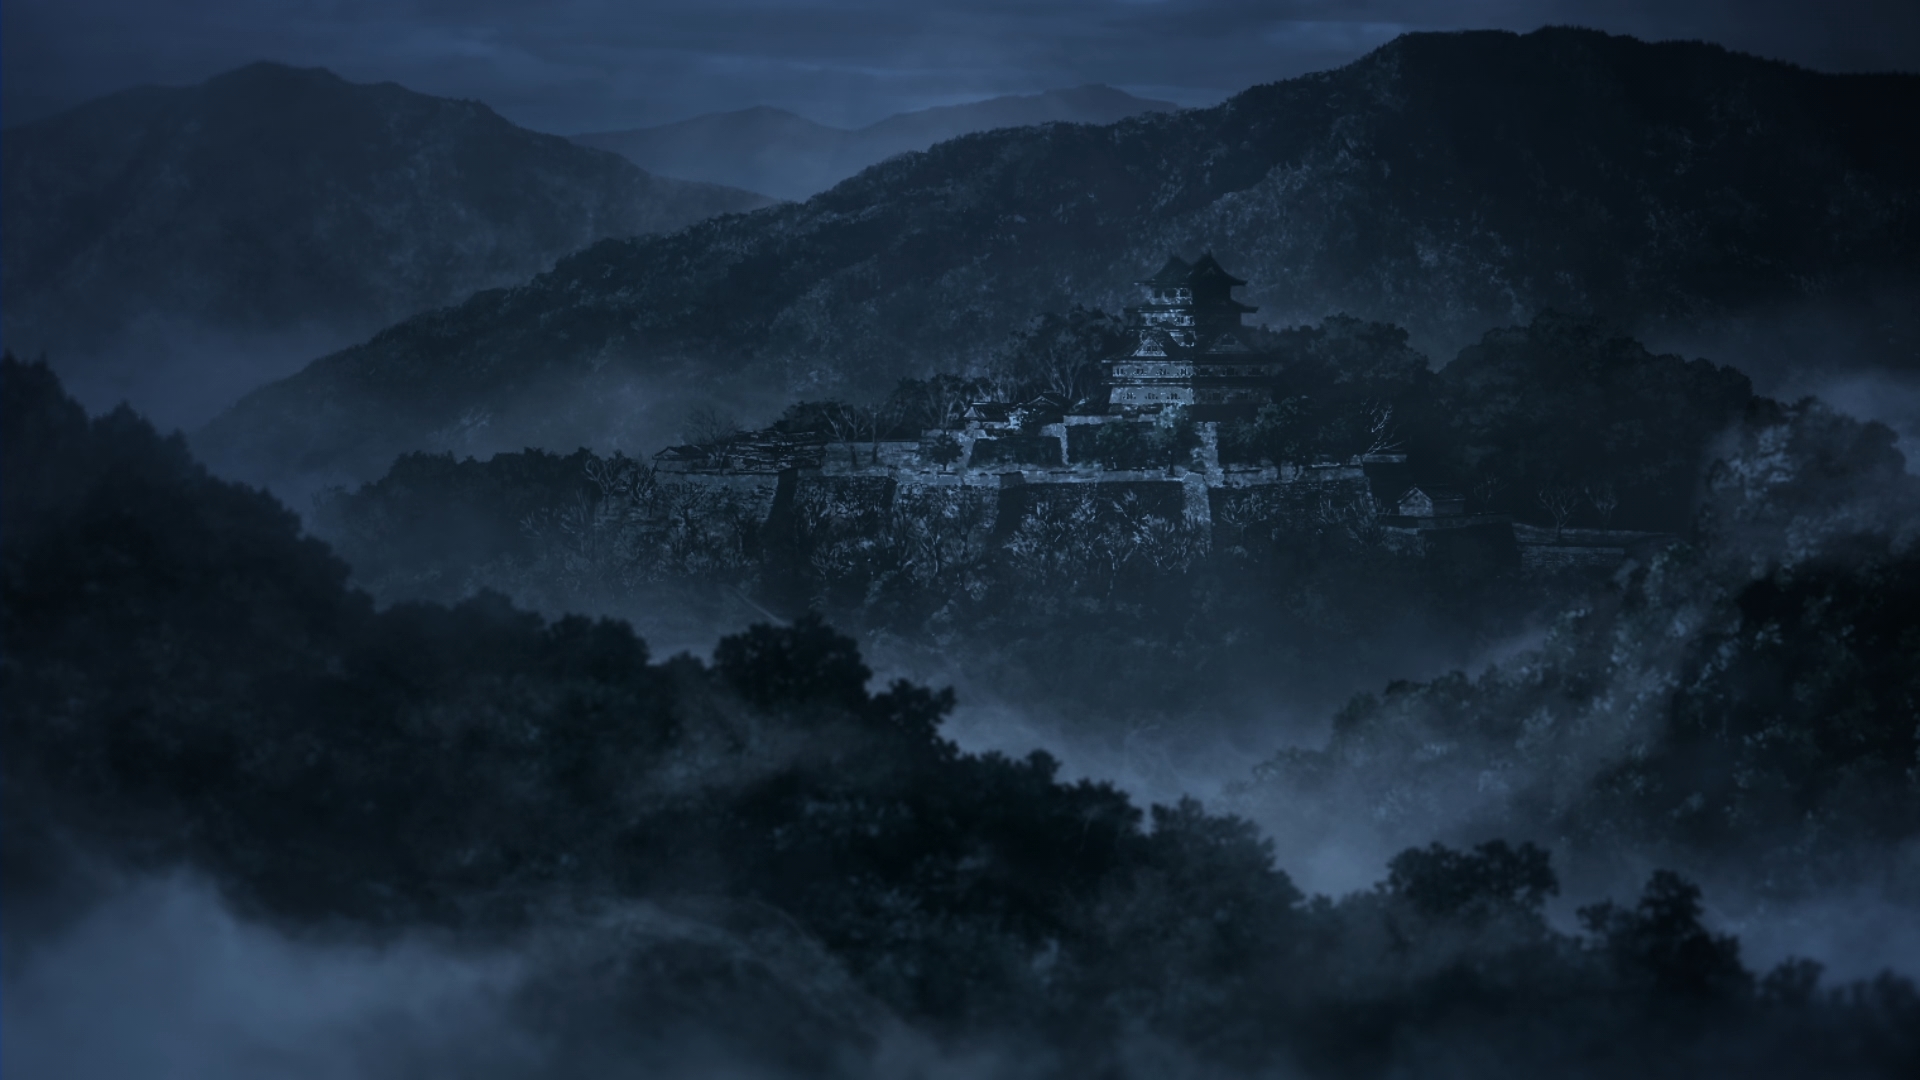 General 1920x1080 Kimetsu no Yaiba dark mist castle fog anime anime screenshot forest night hills trees landscape low light